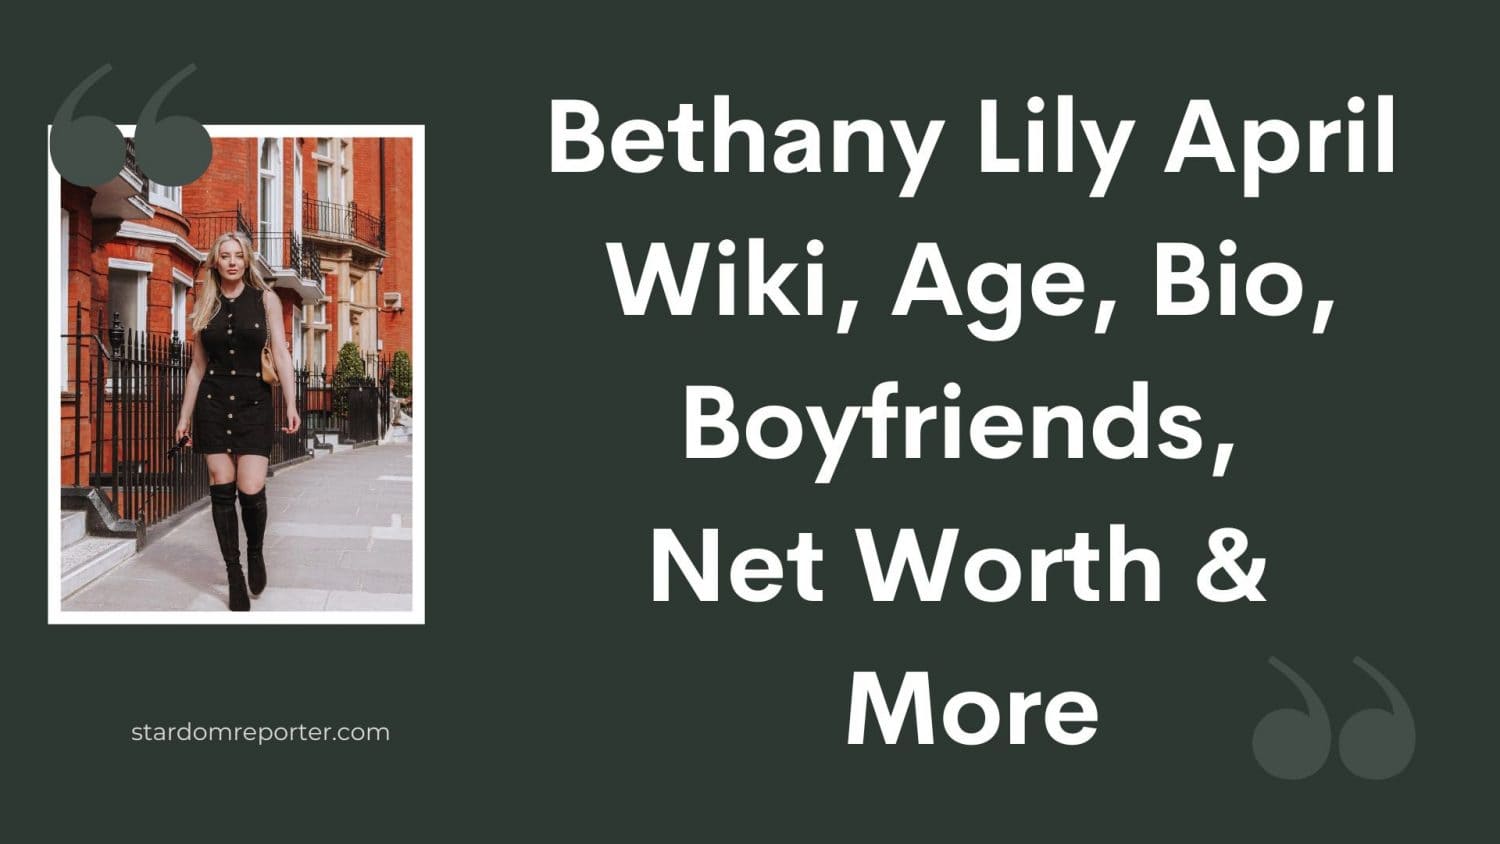 Bethany Lily April Wiki, Age, Bio, Boyfriends, Net Worth & More - 9